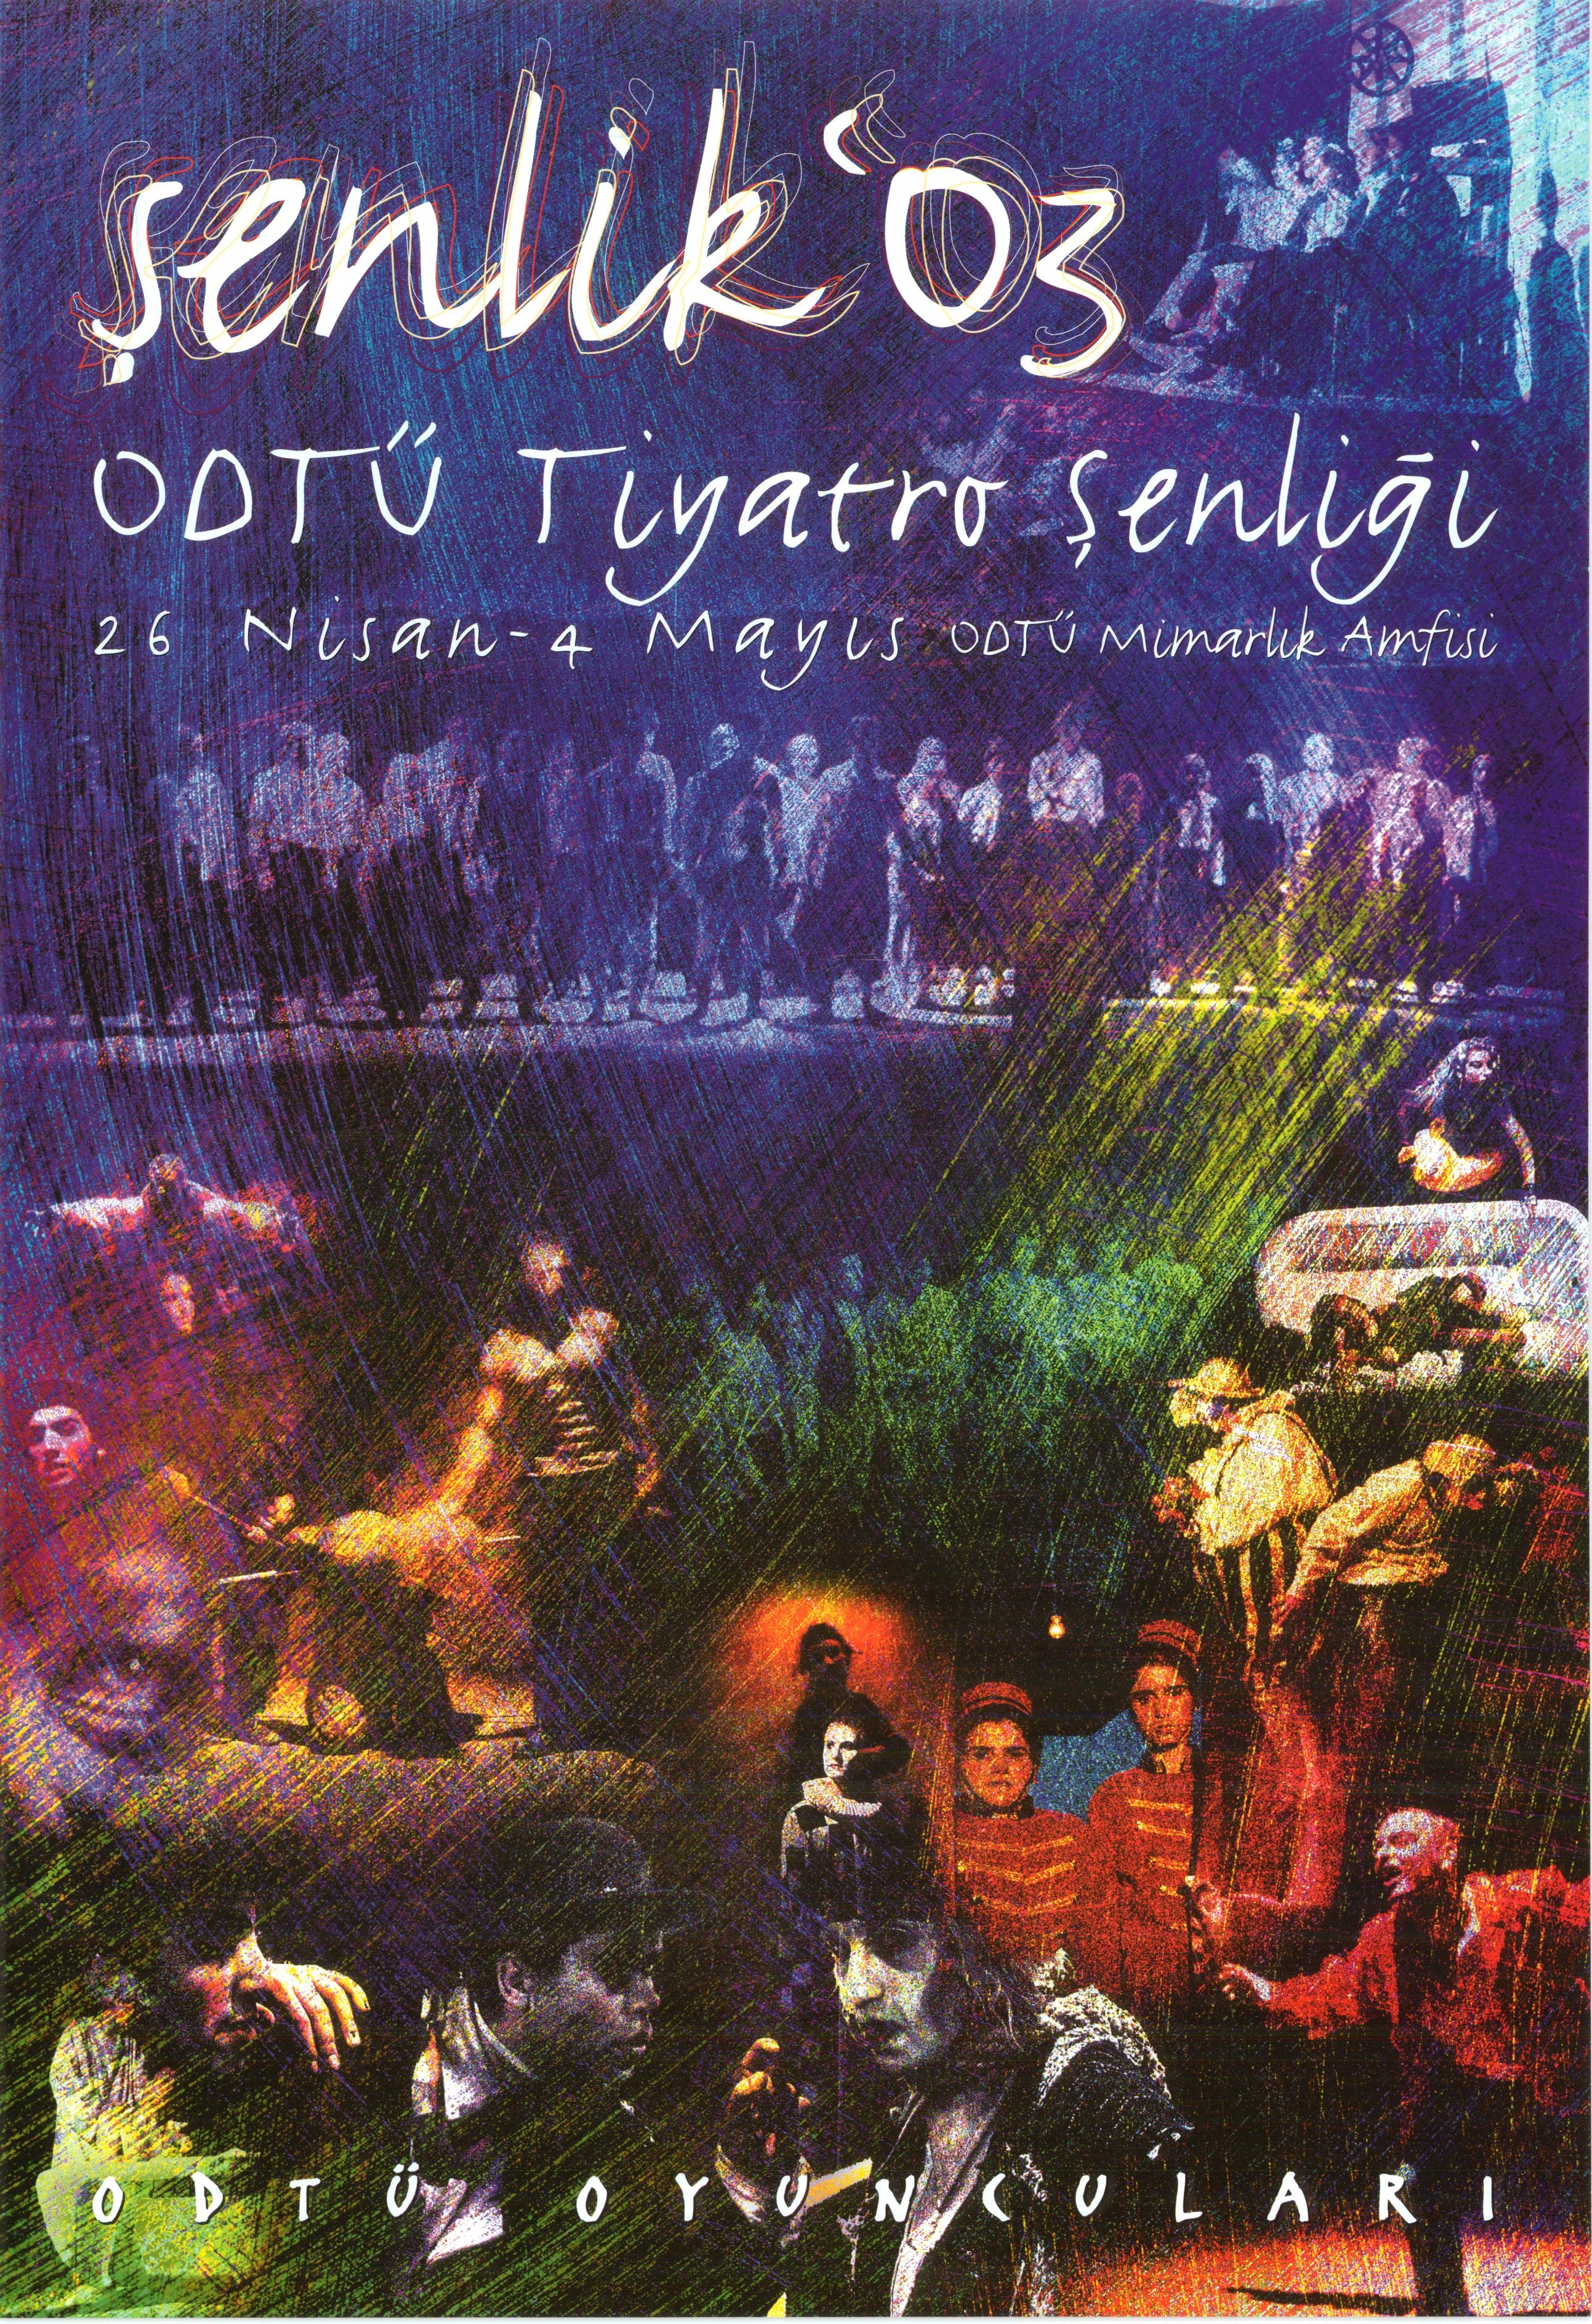 "Festival 03" METU theater festival poster and brochure (2003)